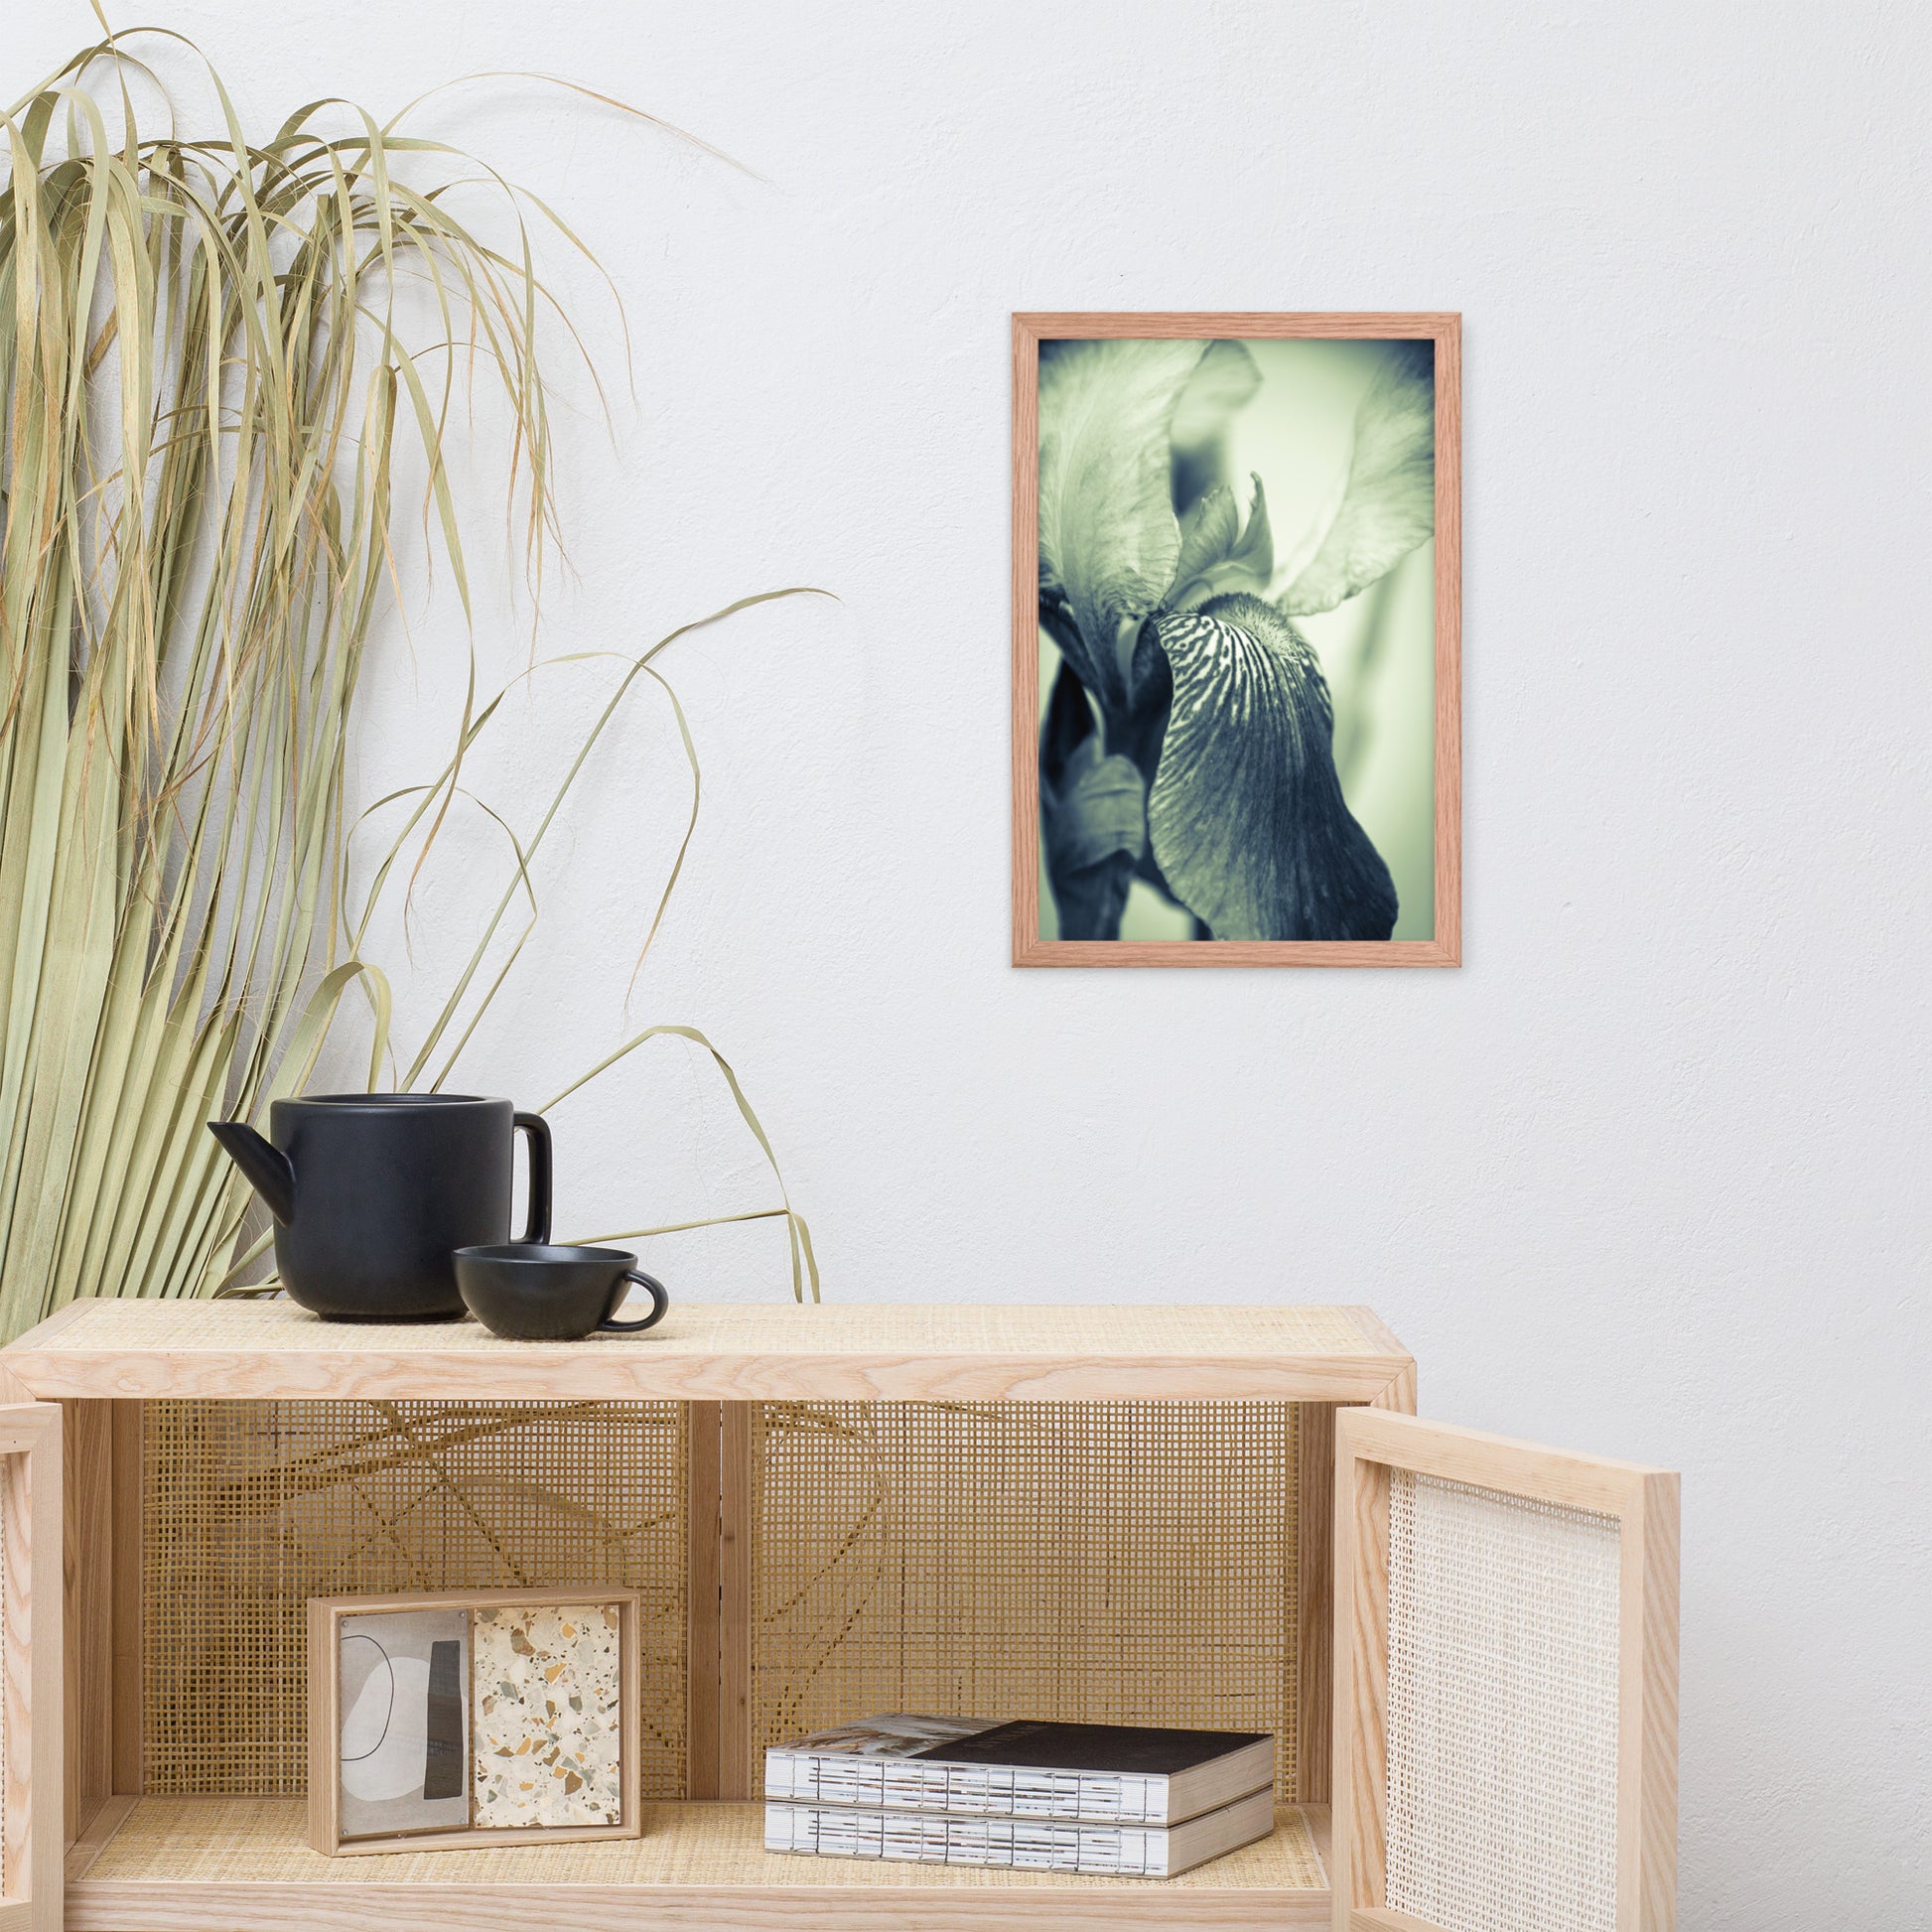 Dining Room Wall Decor Ideas: Abstract Japanese Iris Delight- Botanical / Floral / Flora / Flowers / Nature Photograph Framed Wall Art Print - Artwork - Wall Decor - Home Decor